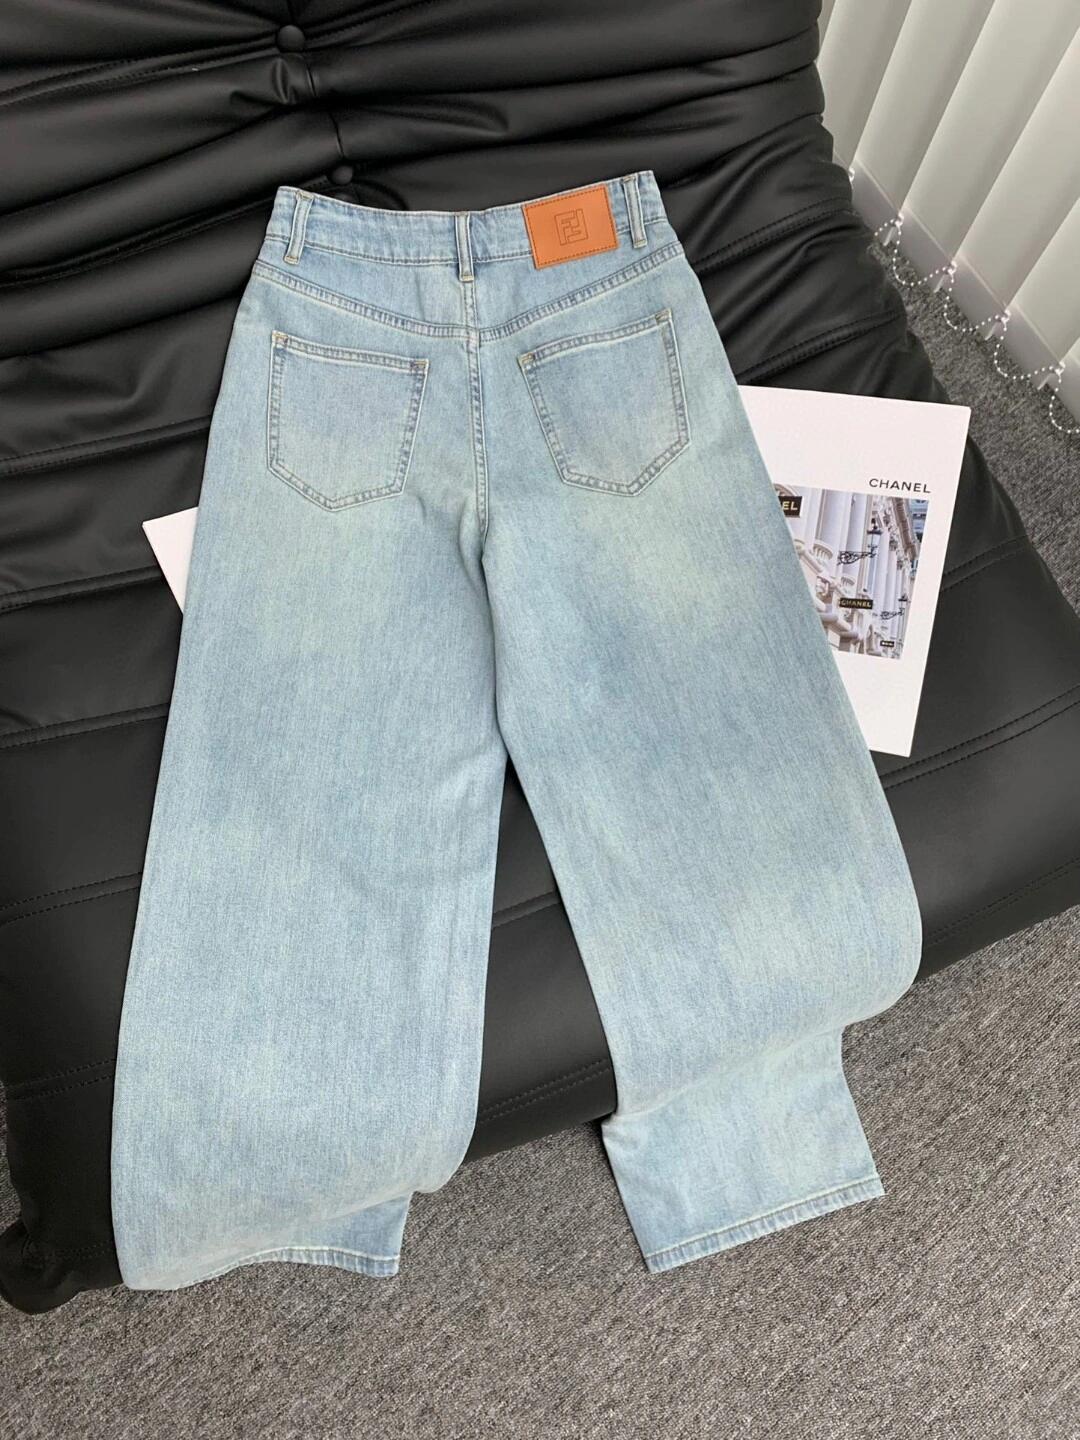 Light solid color jeans